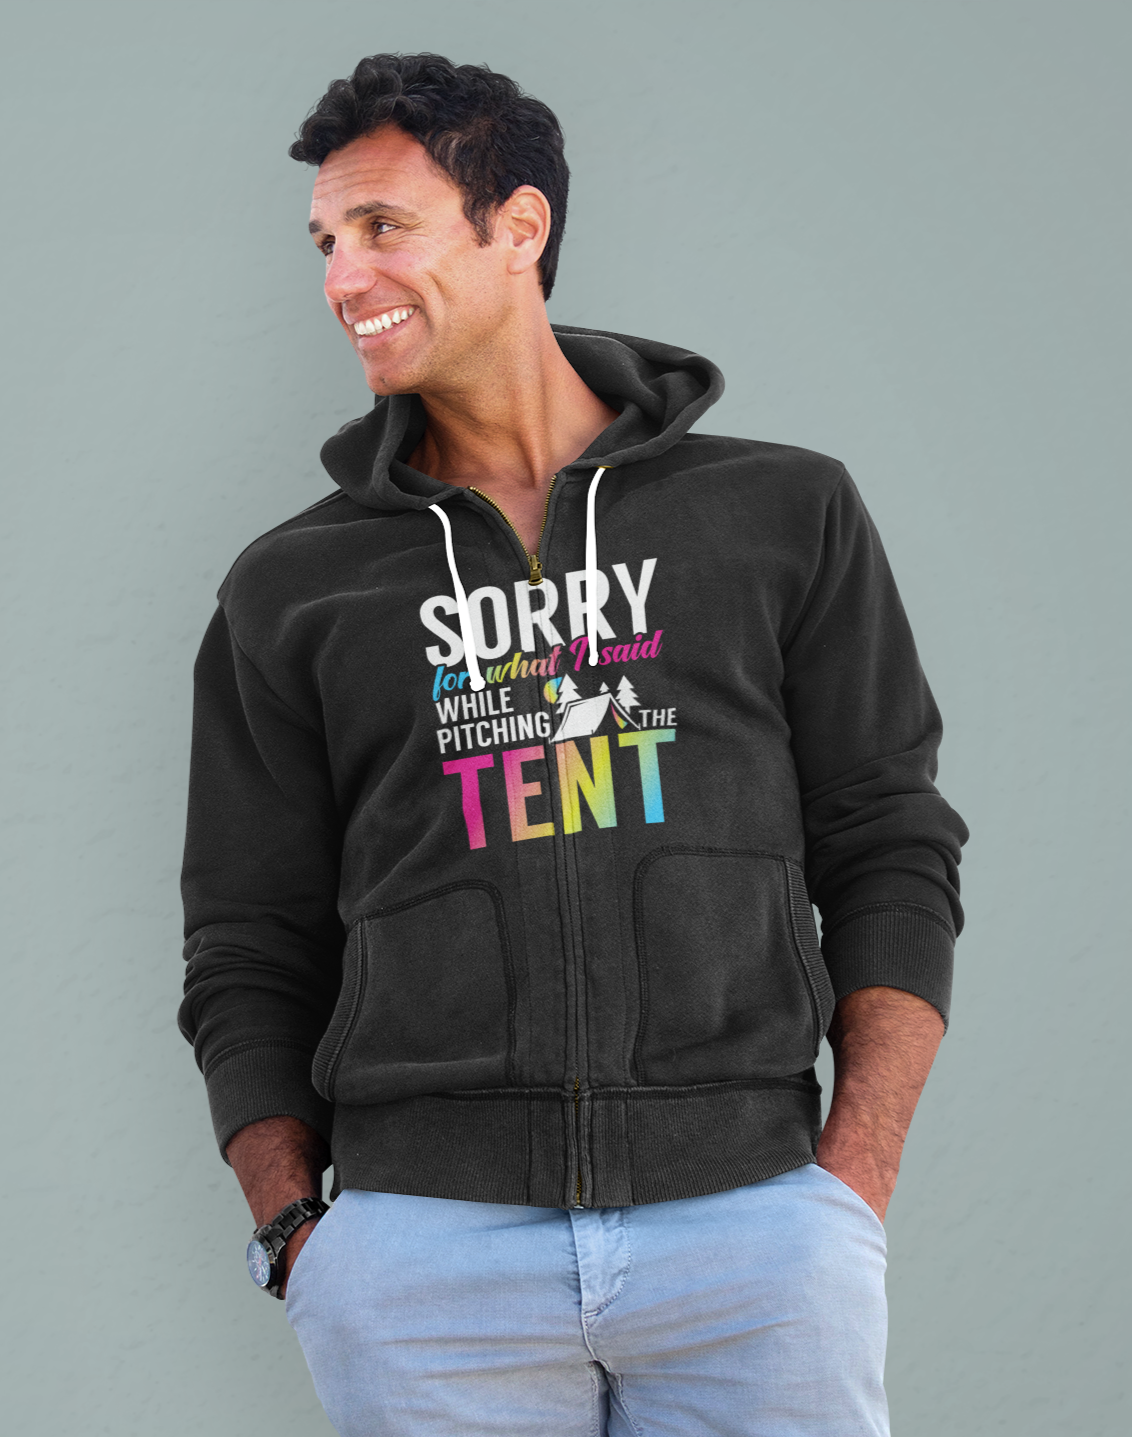 Sorry for... pitching tent;  Full-zip hoodie sweatshirt